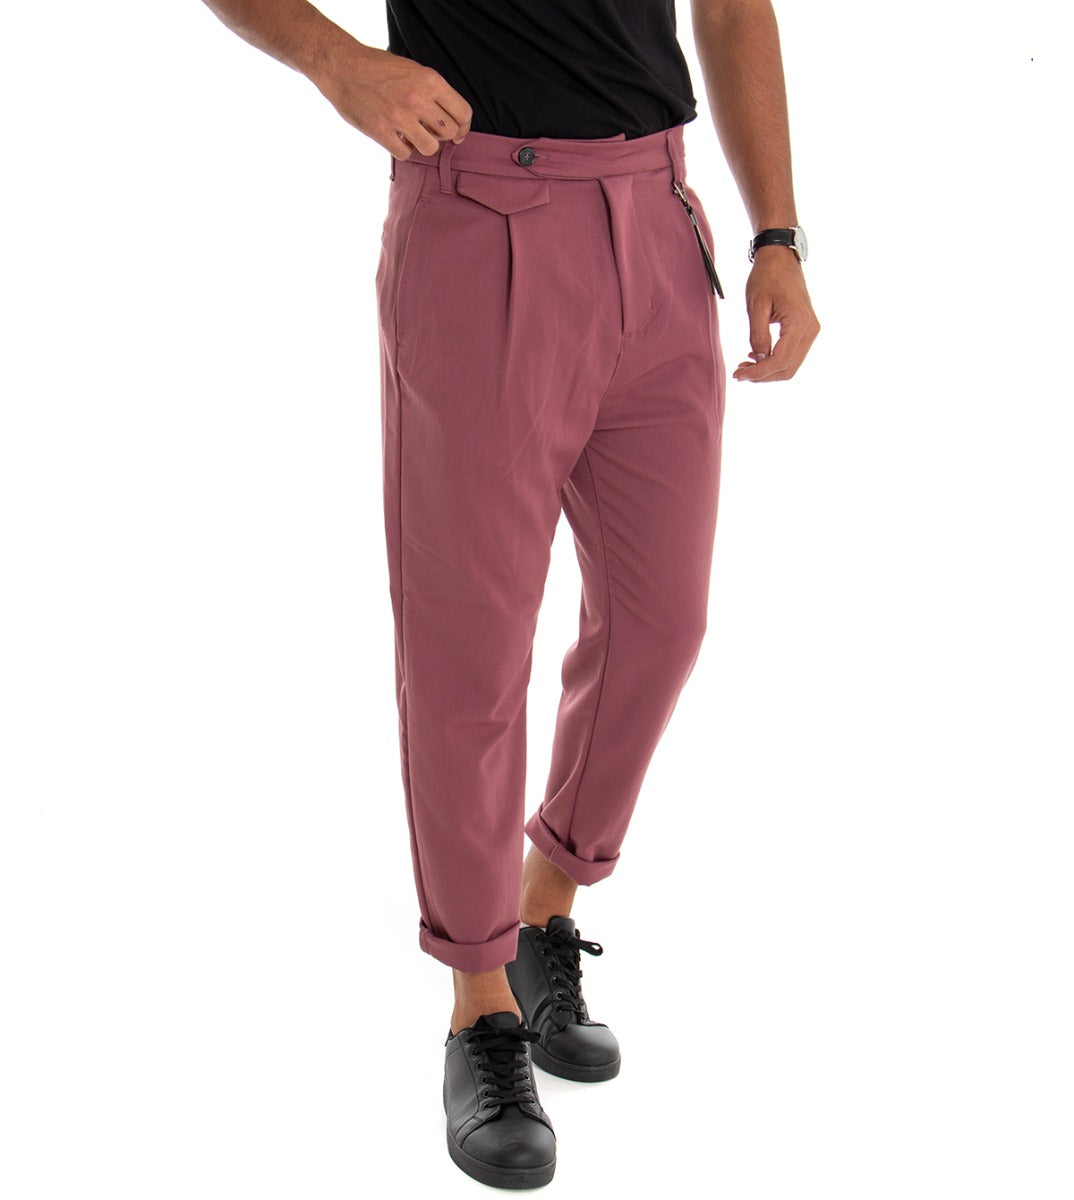 Pantaloni Uomo Classico Viscosa Tinta Unita Rosa Tasca America Con Pinces GIOSAL-P3873A